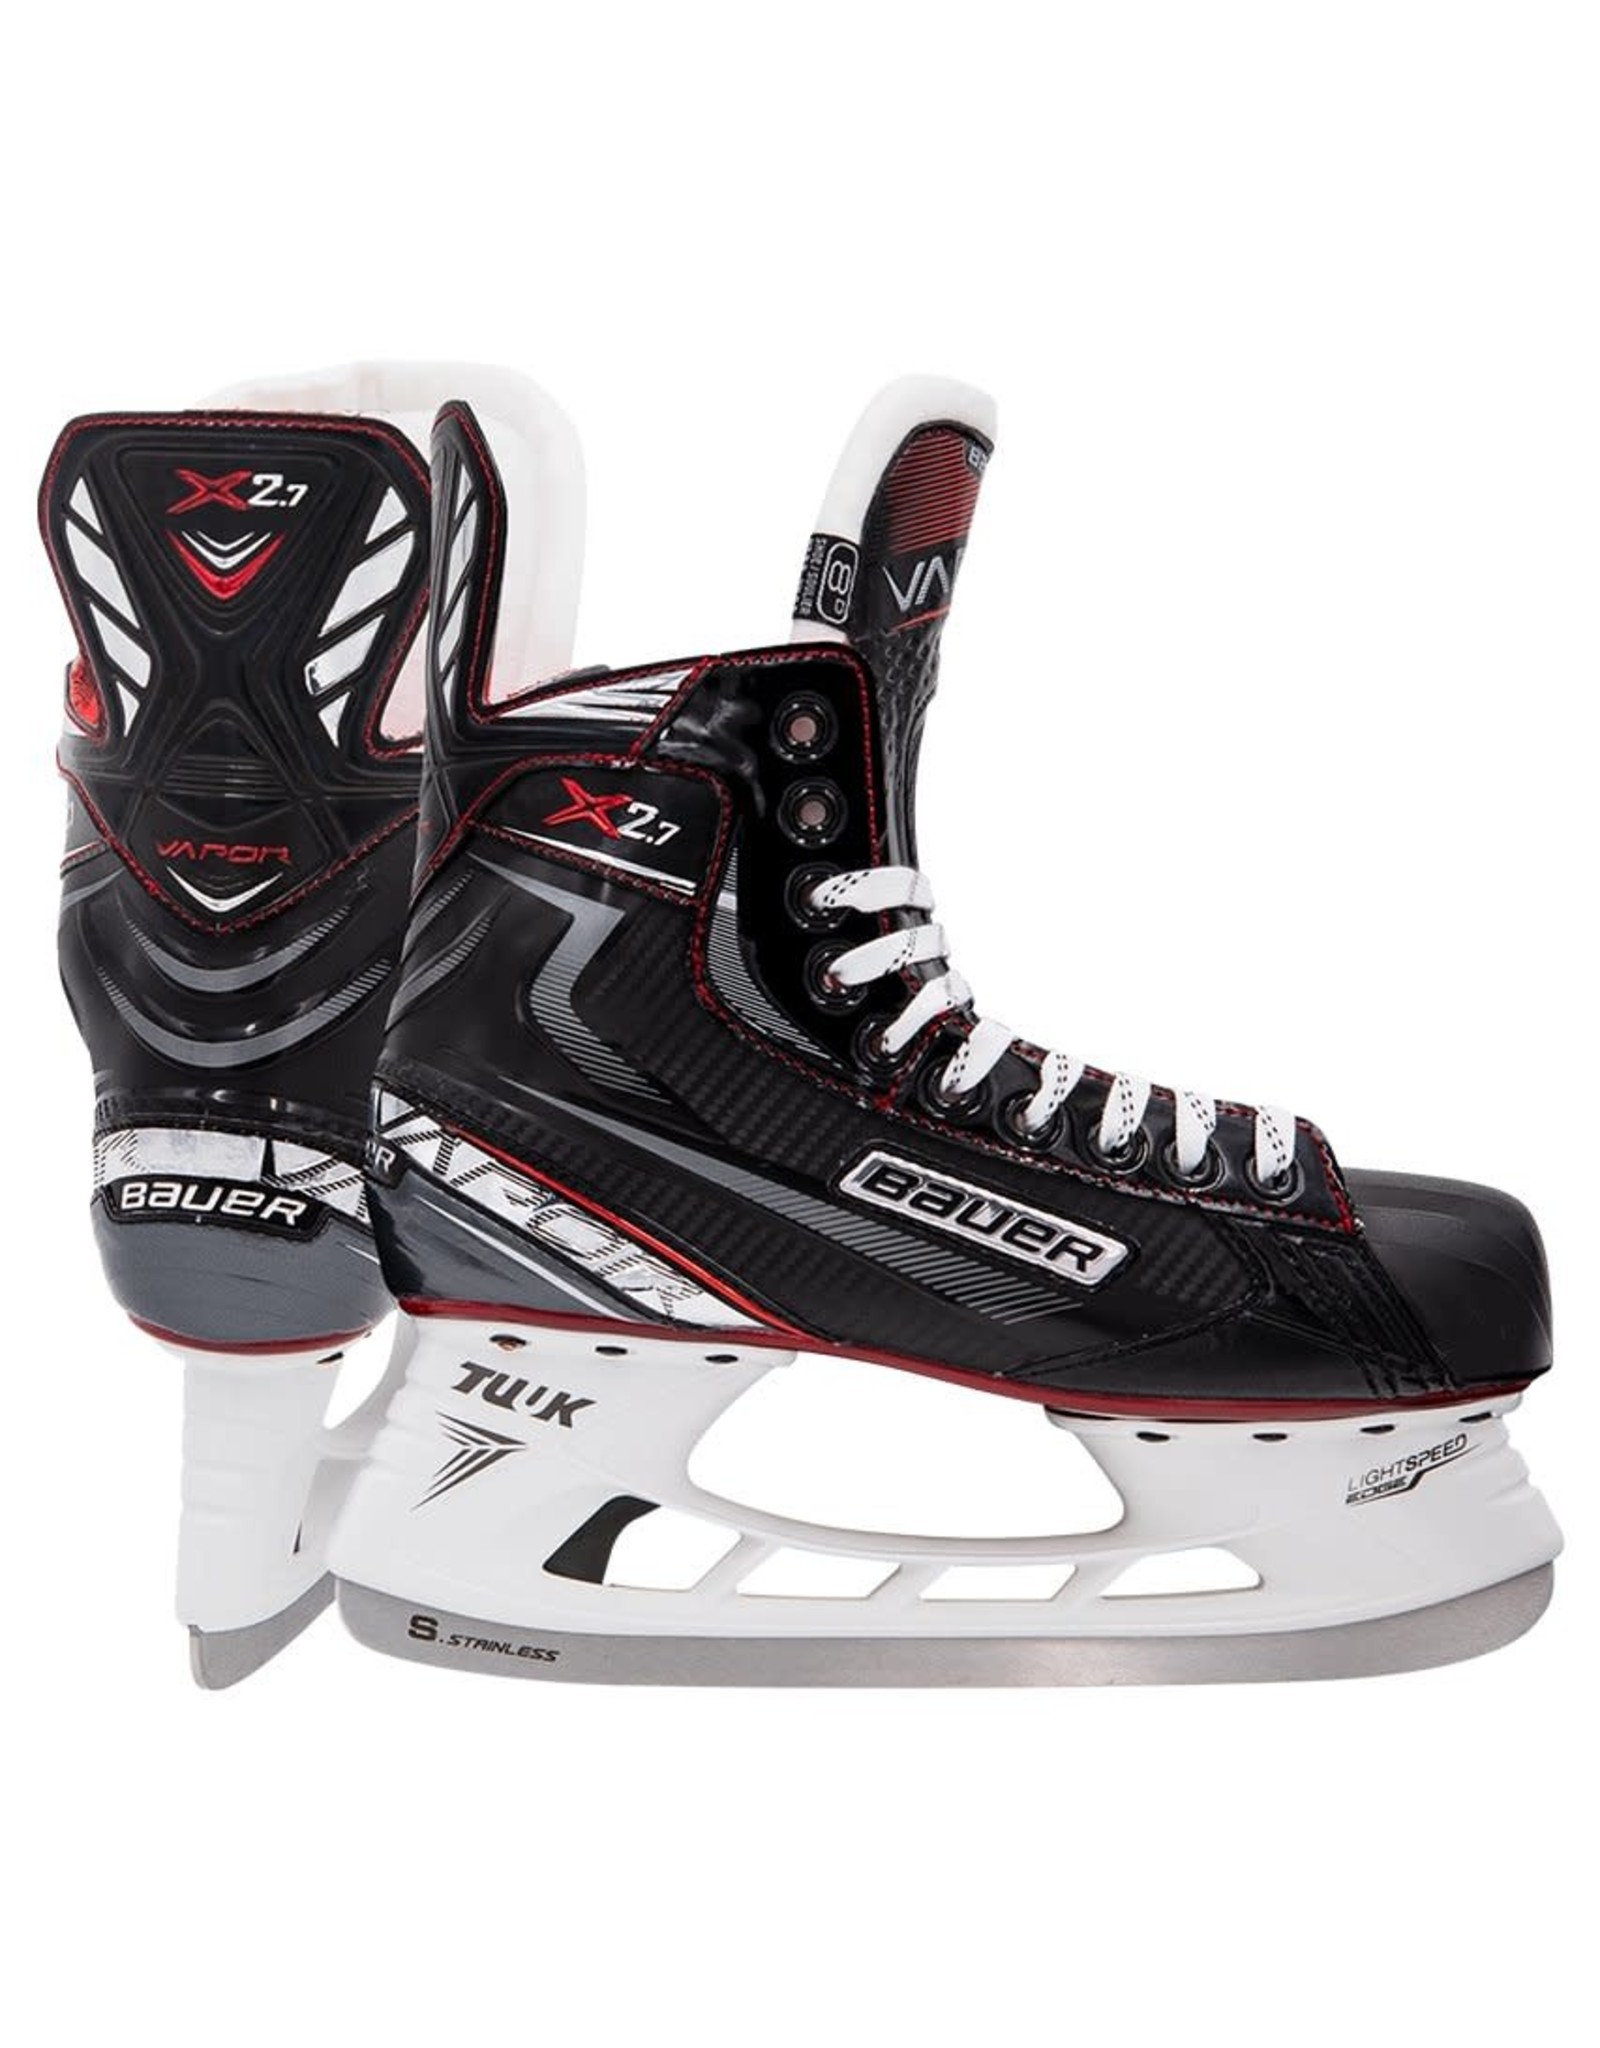 BAUER Vapor X2.7, Junior Hockey Skate